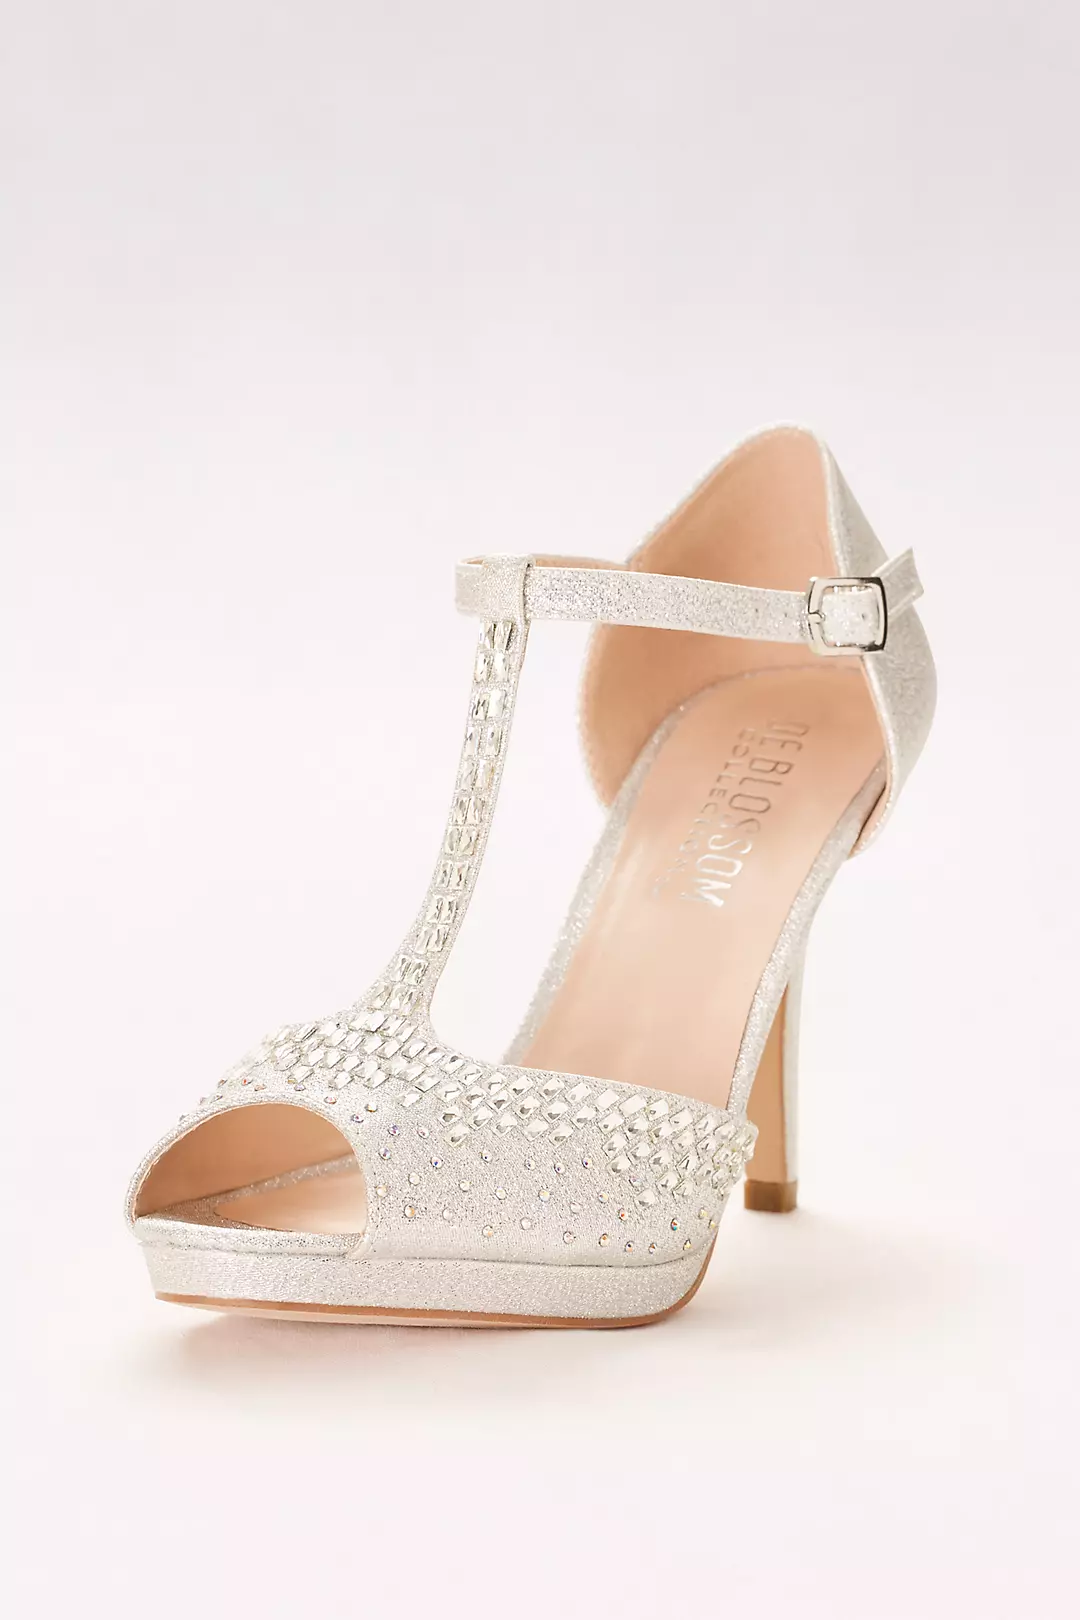 Crystal-Embellished Peep-Toe T-Strap Heels Image